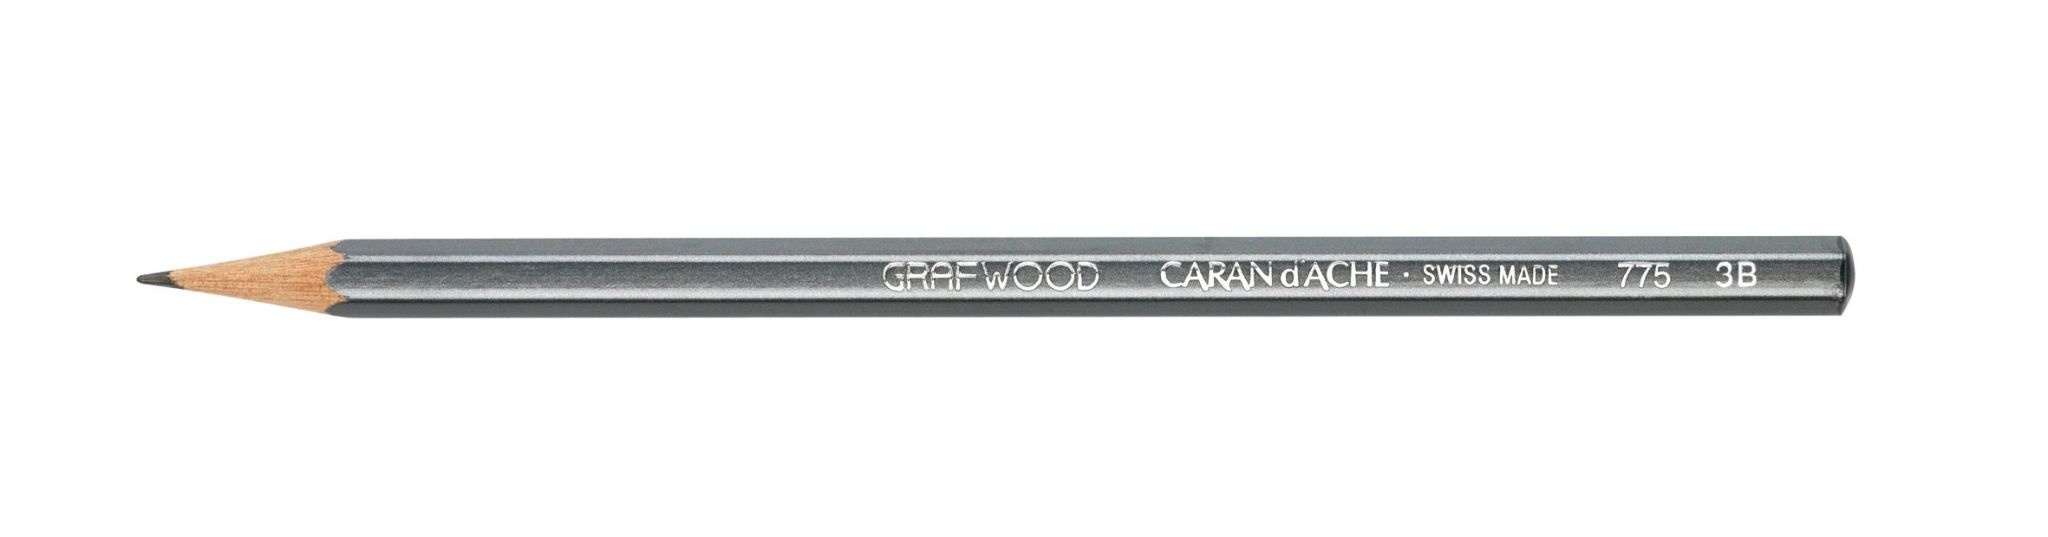 Caran d'Ache : Grafwood : Graphite Pencil : 9b